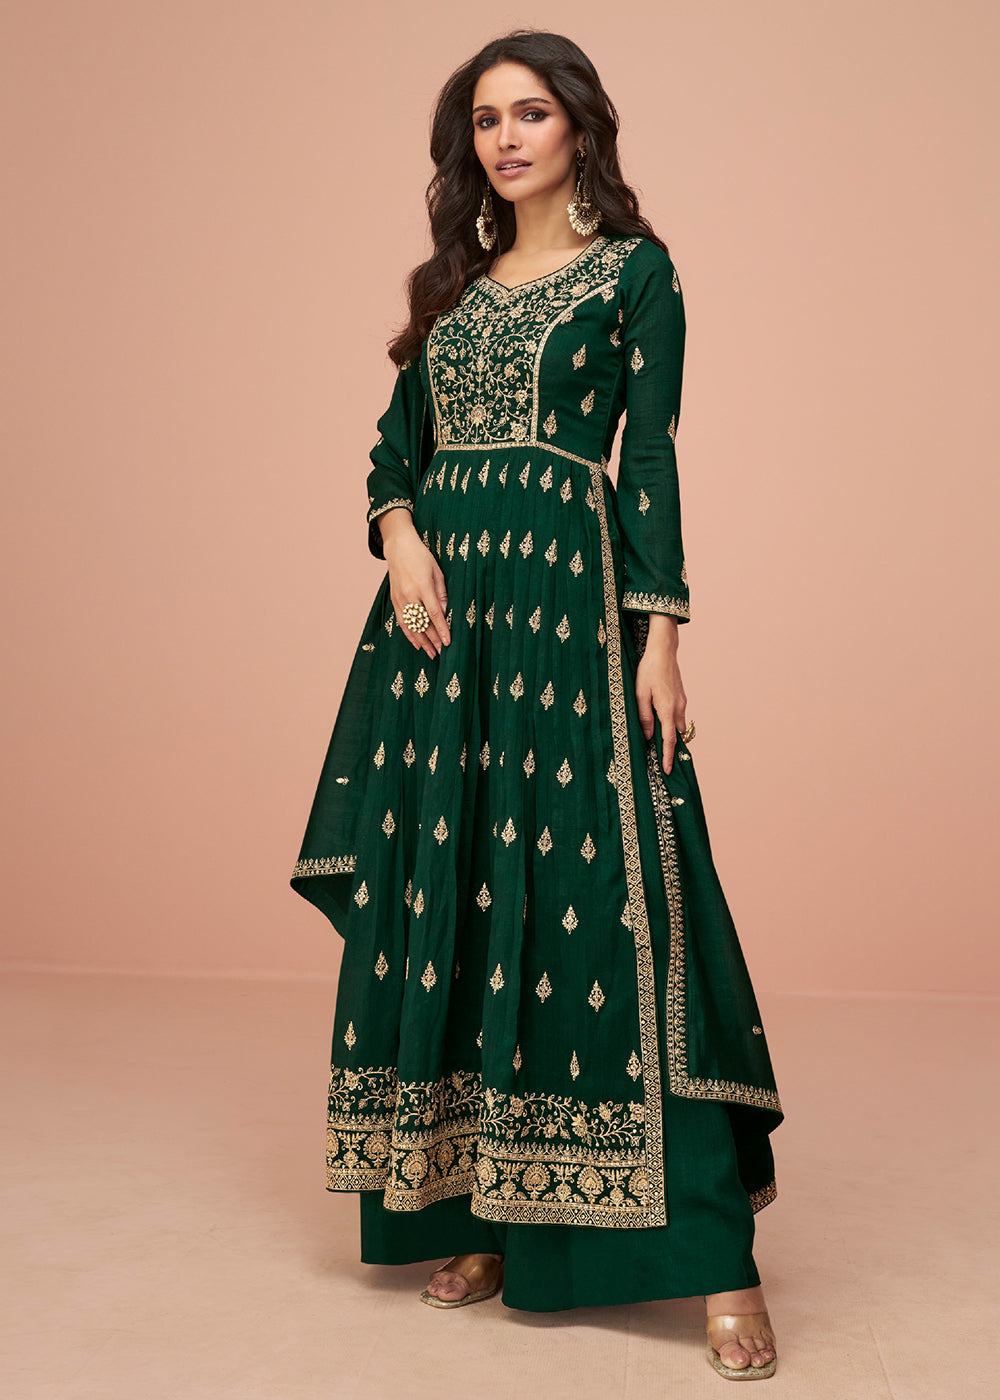 Buy Now Bottle Green Wedding Wear Silk Trendy Palazzo Suit Online in USA, UK, Canada, Germany, Australia & Worldwide at Empress Clothing.